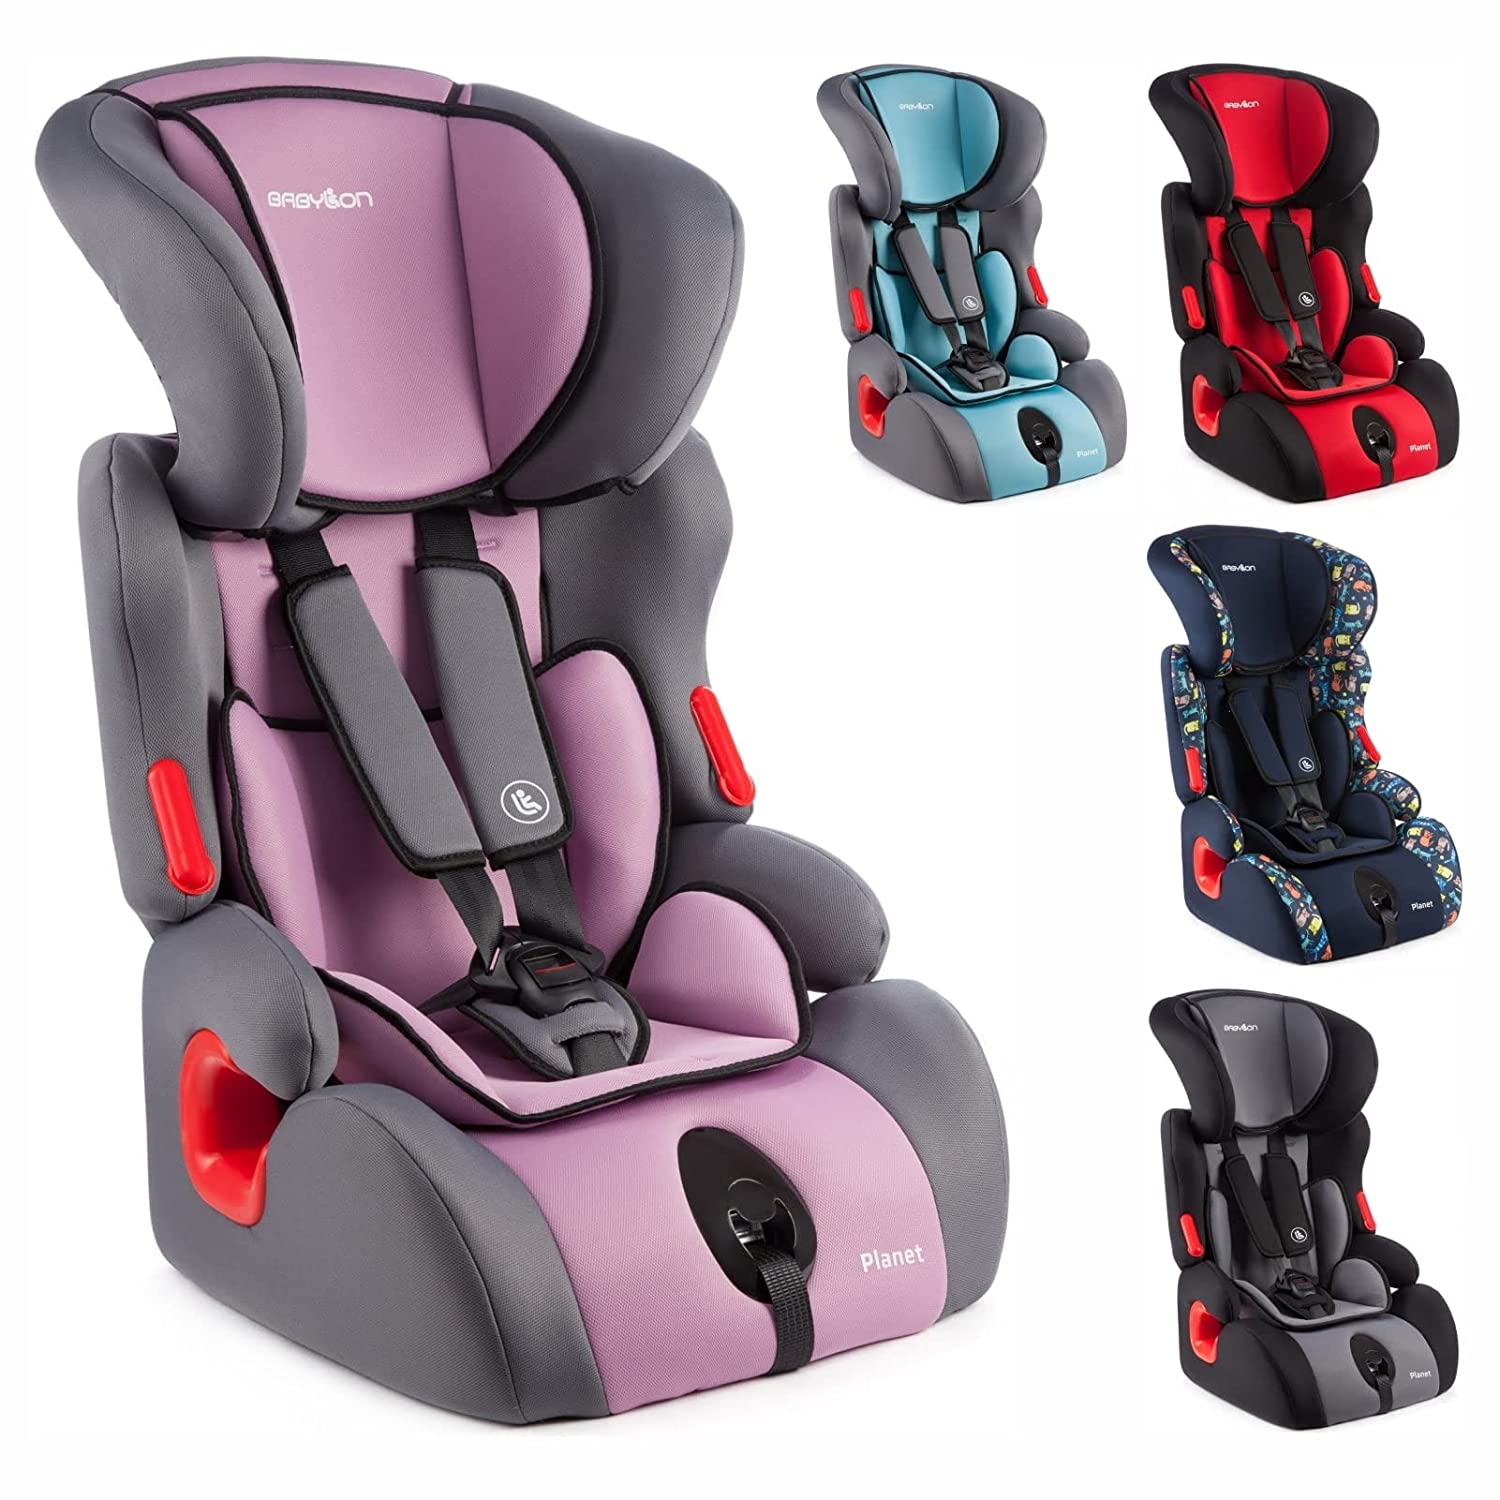 BABYLON Baby Seat Auto Planet Child Car Seat Group 1/2/3, Child Seat 9-36 kg (1 to 12 Years). ECE R44/0 Child Seat Grey/Light Purple